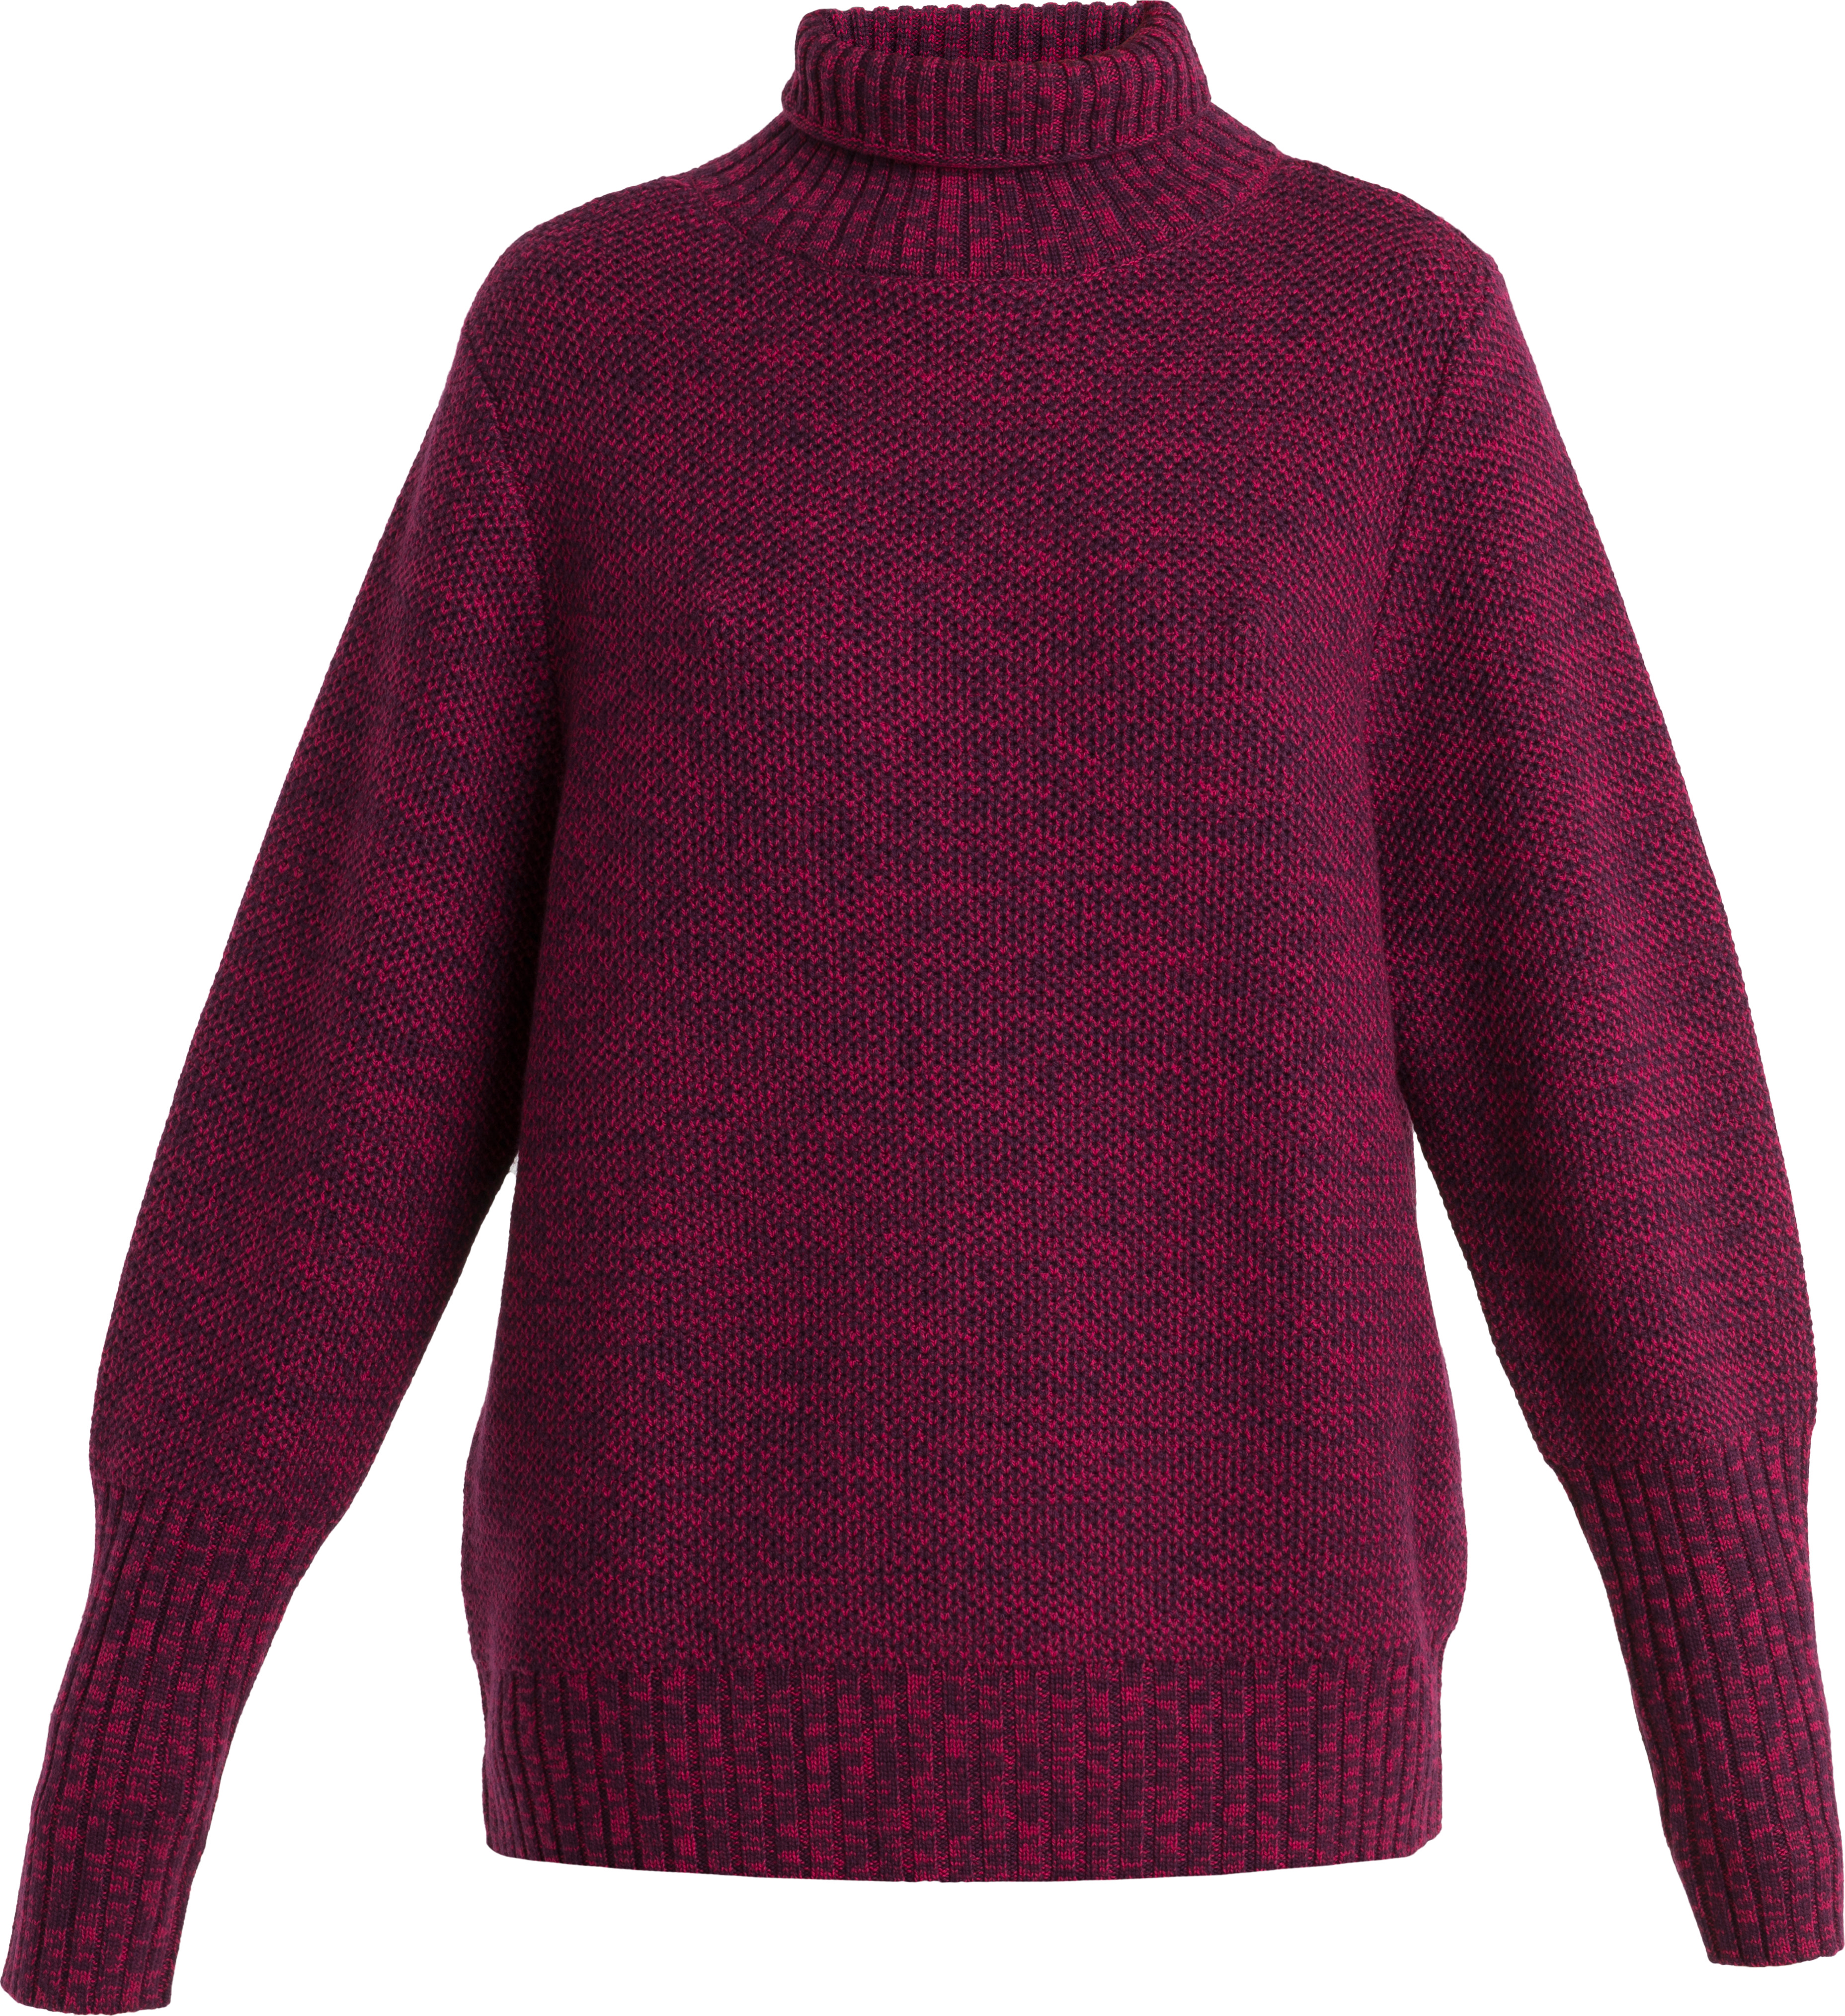 Women’s Seevista Funnel Neck Sweater Nightshade/Electron Pink